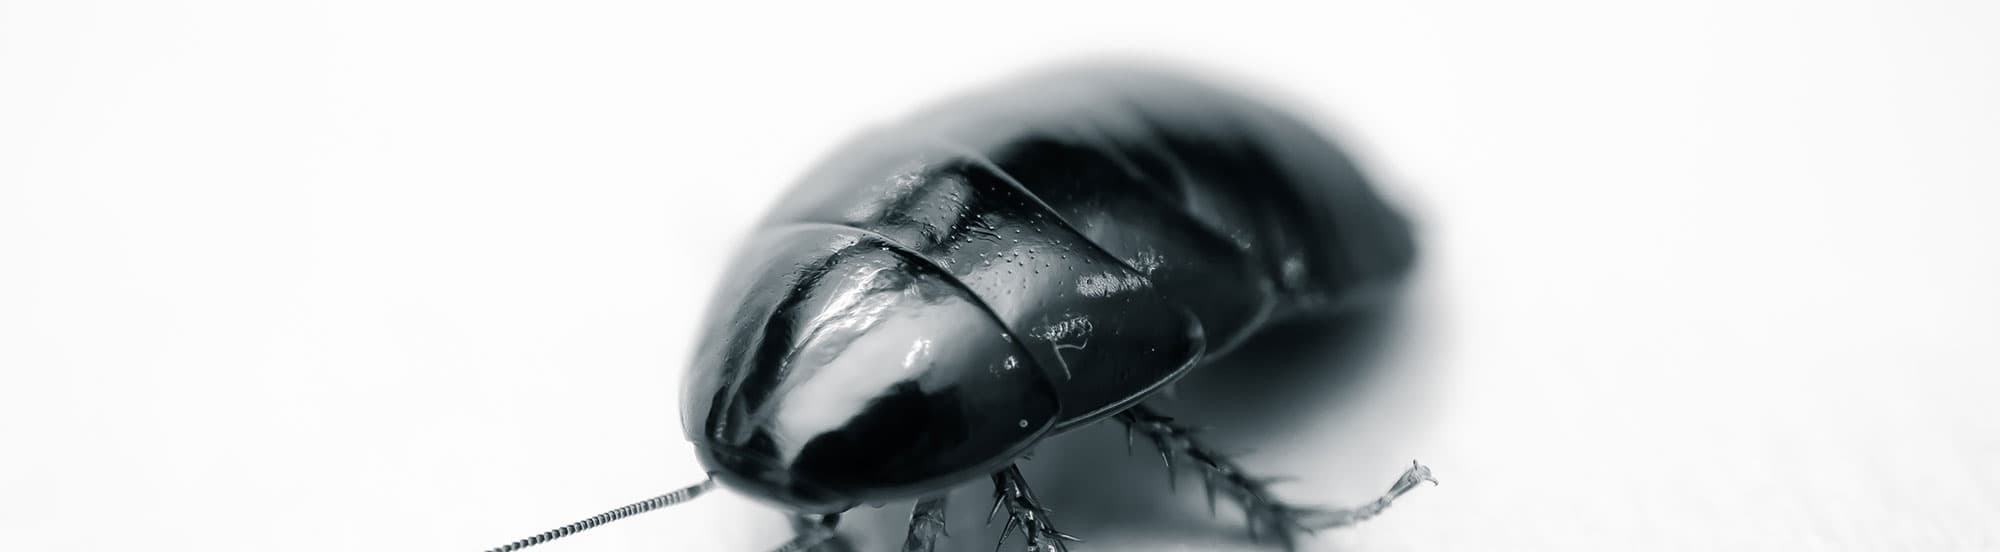 shiny black cockroach